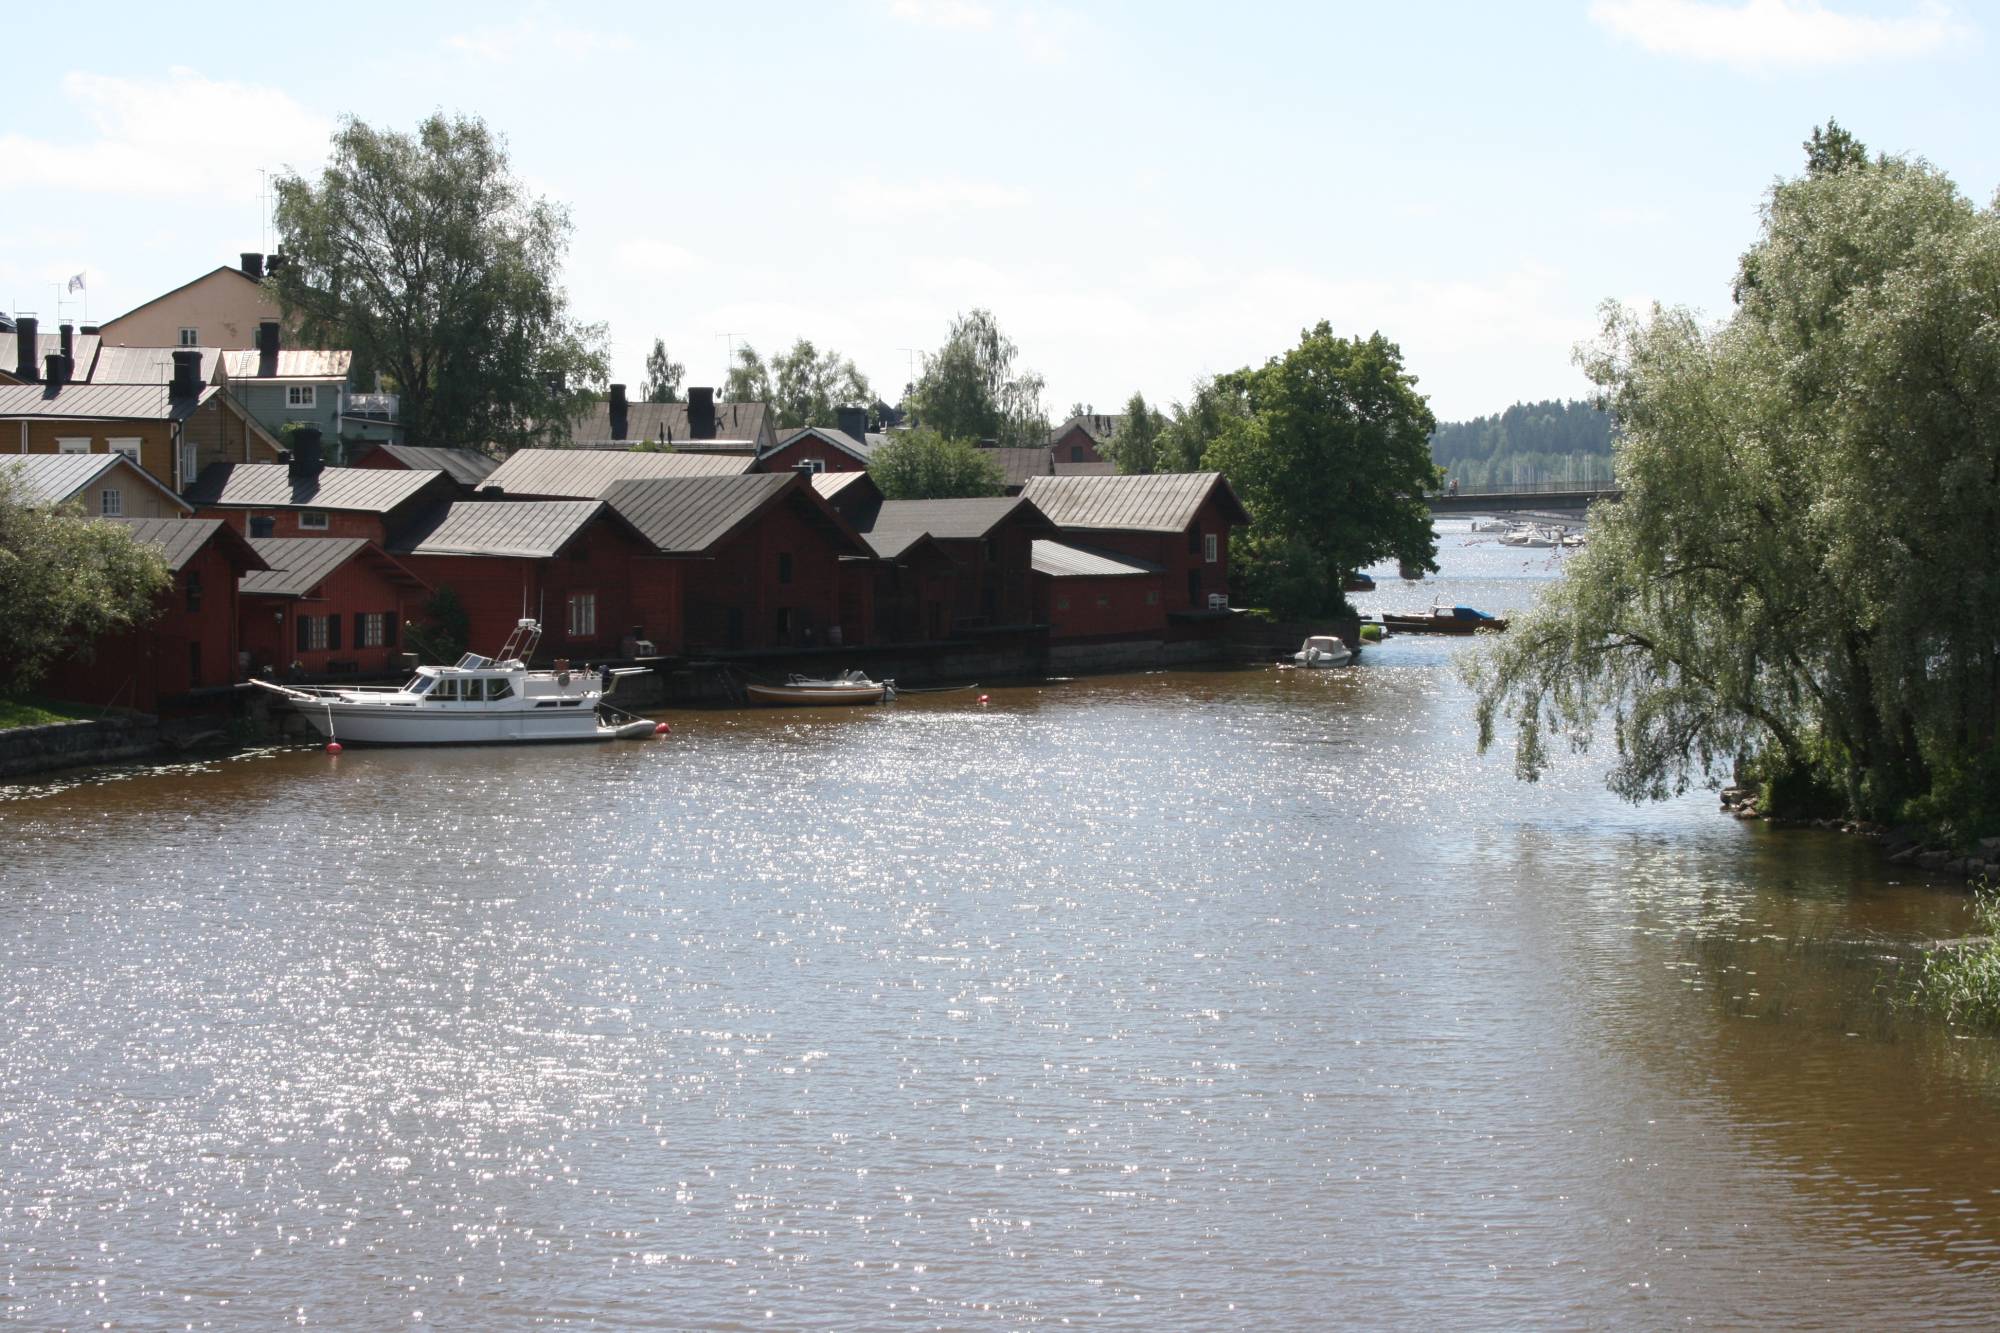 A view of Porvoo, Finland